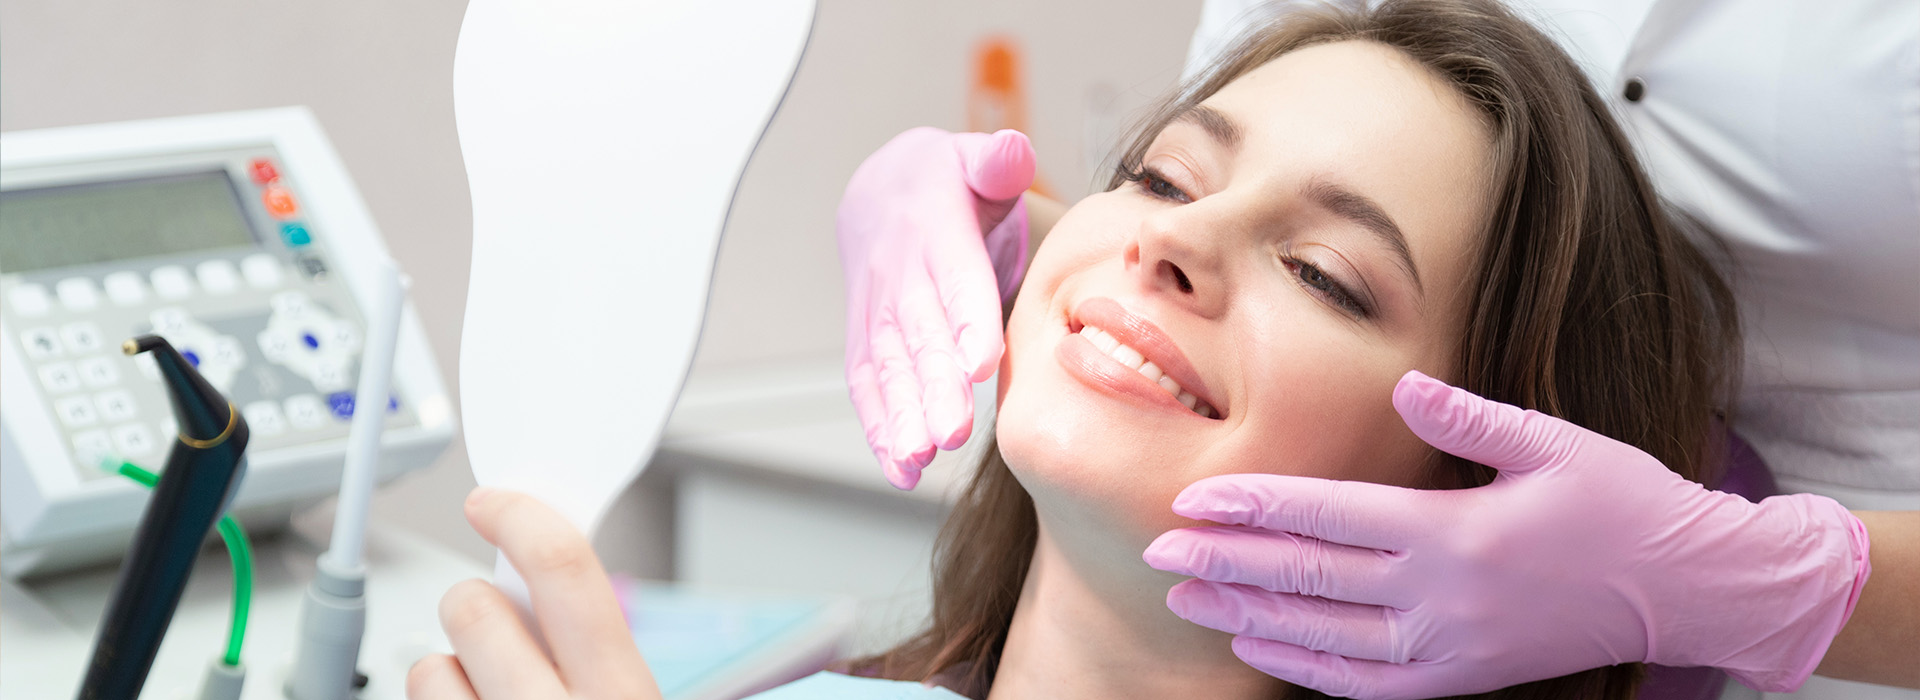 Plainfield Dental Care | TMJ Treatment, Preventative Dentistry and Teeth Whitening